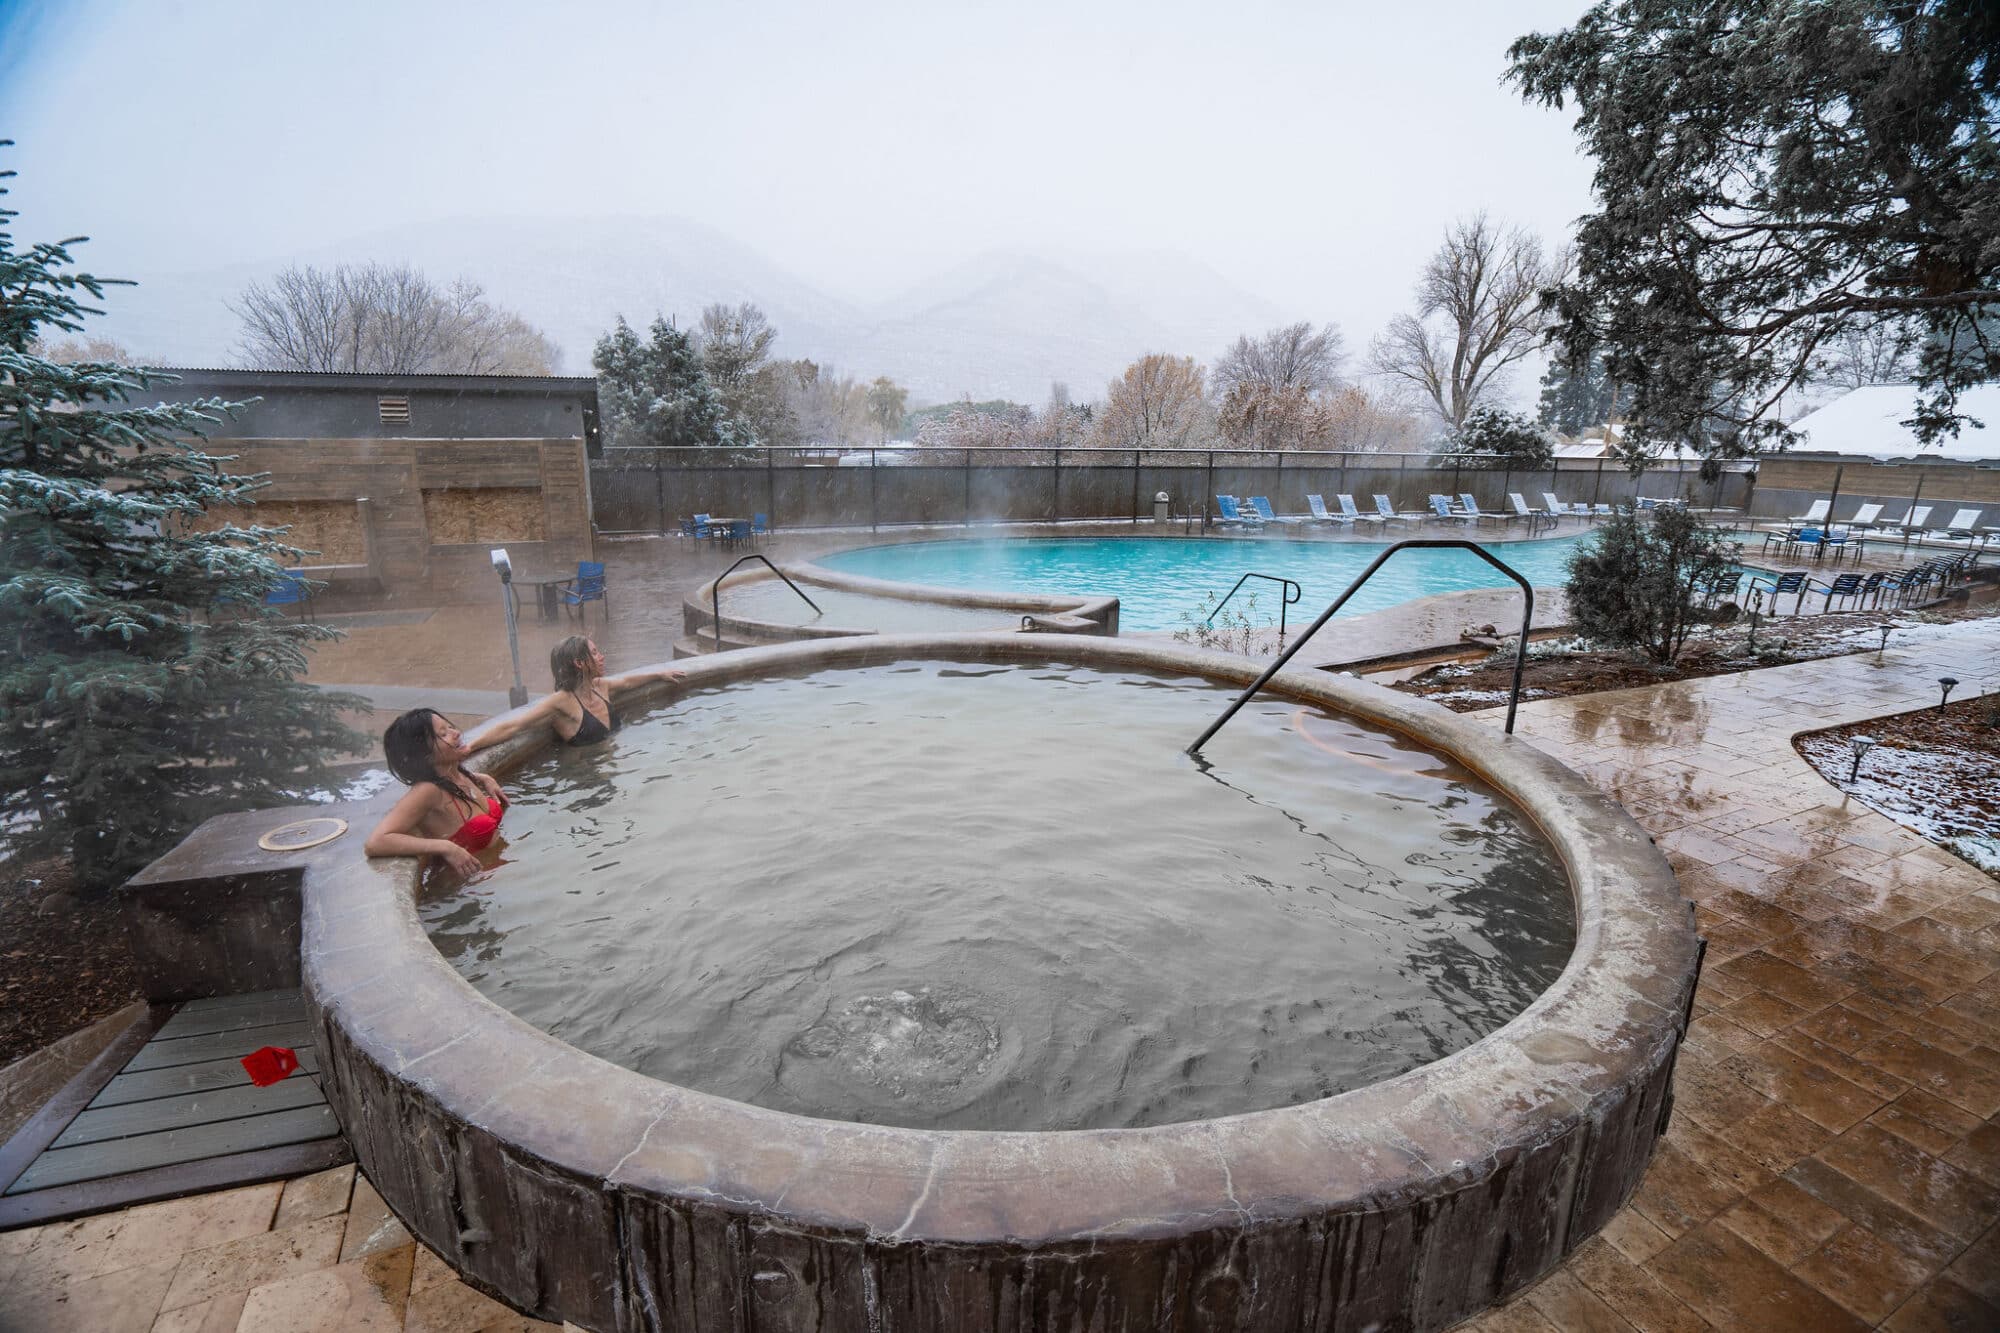 Two women soak in one of the hot pools at Durango Hot Springs resort